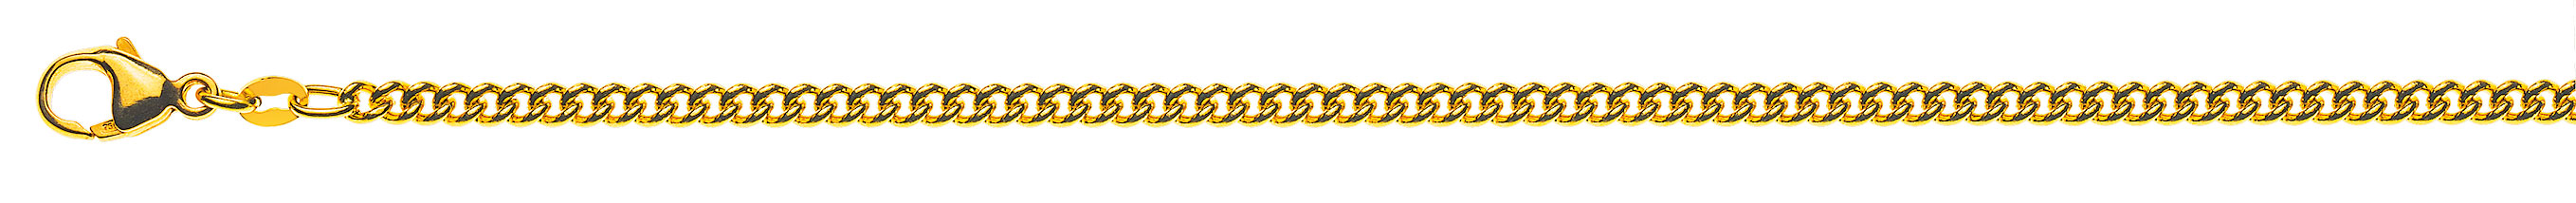 AURONOS Prestige Necklace yellow gold 18K round curb chain 55cm 2.8mm